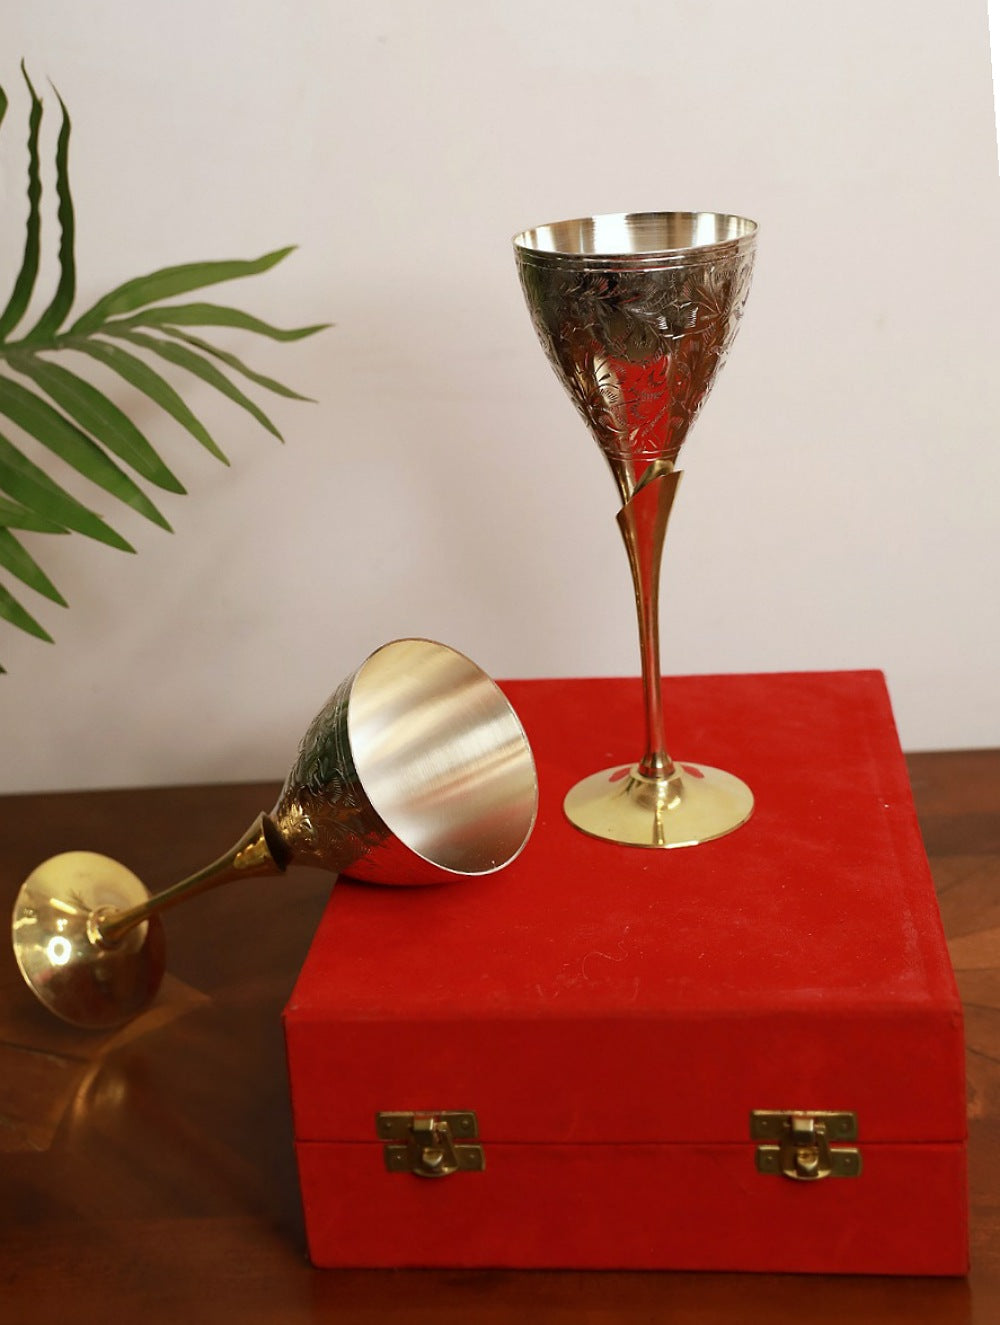 Buy Brass Wine Glass Online in India, Brass Handicrafts